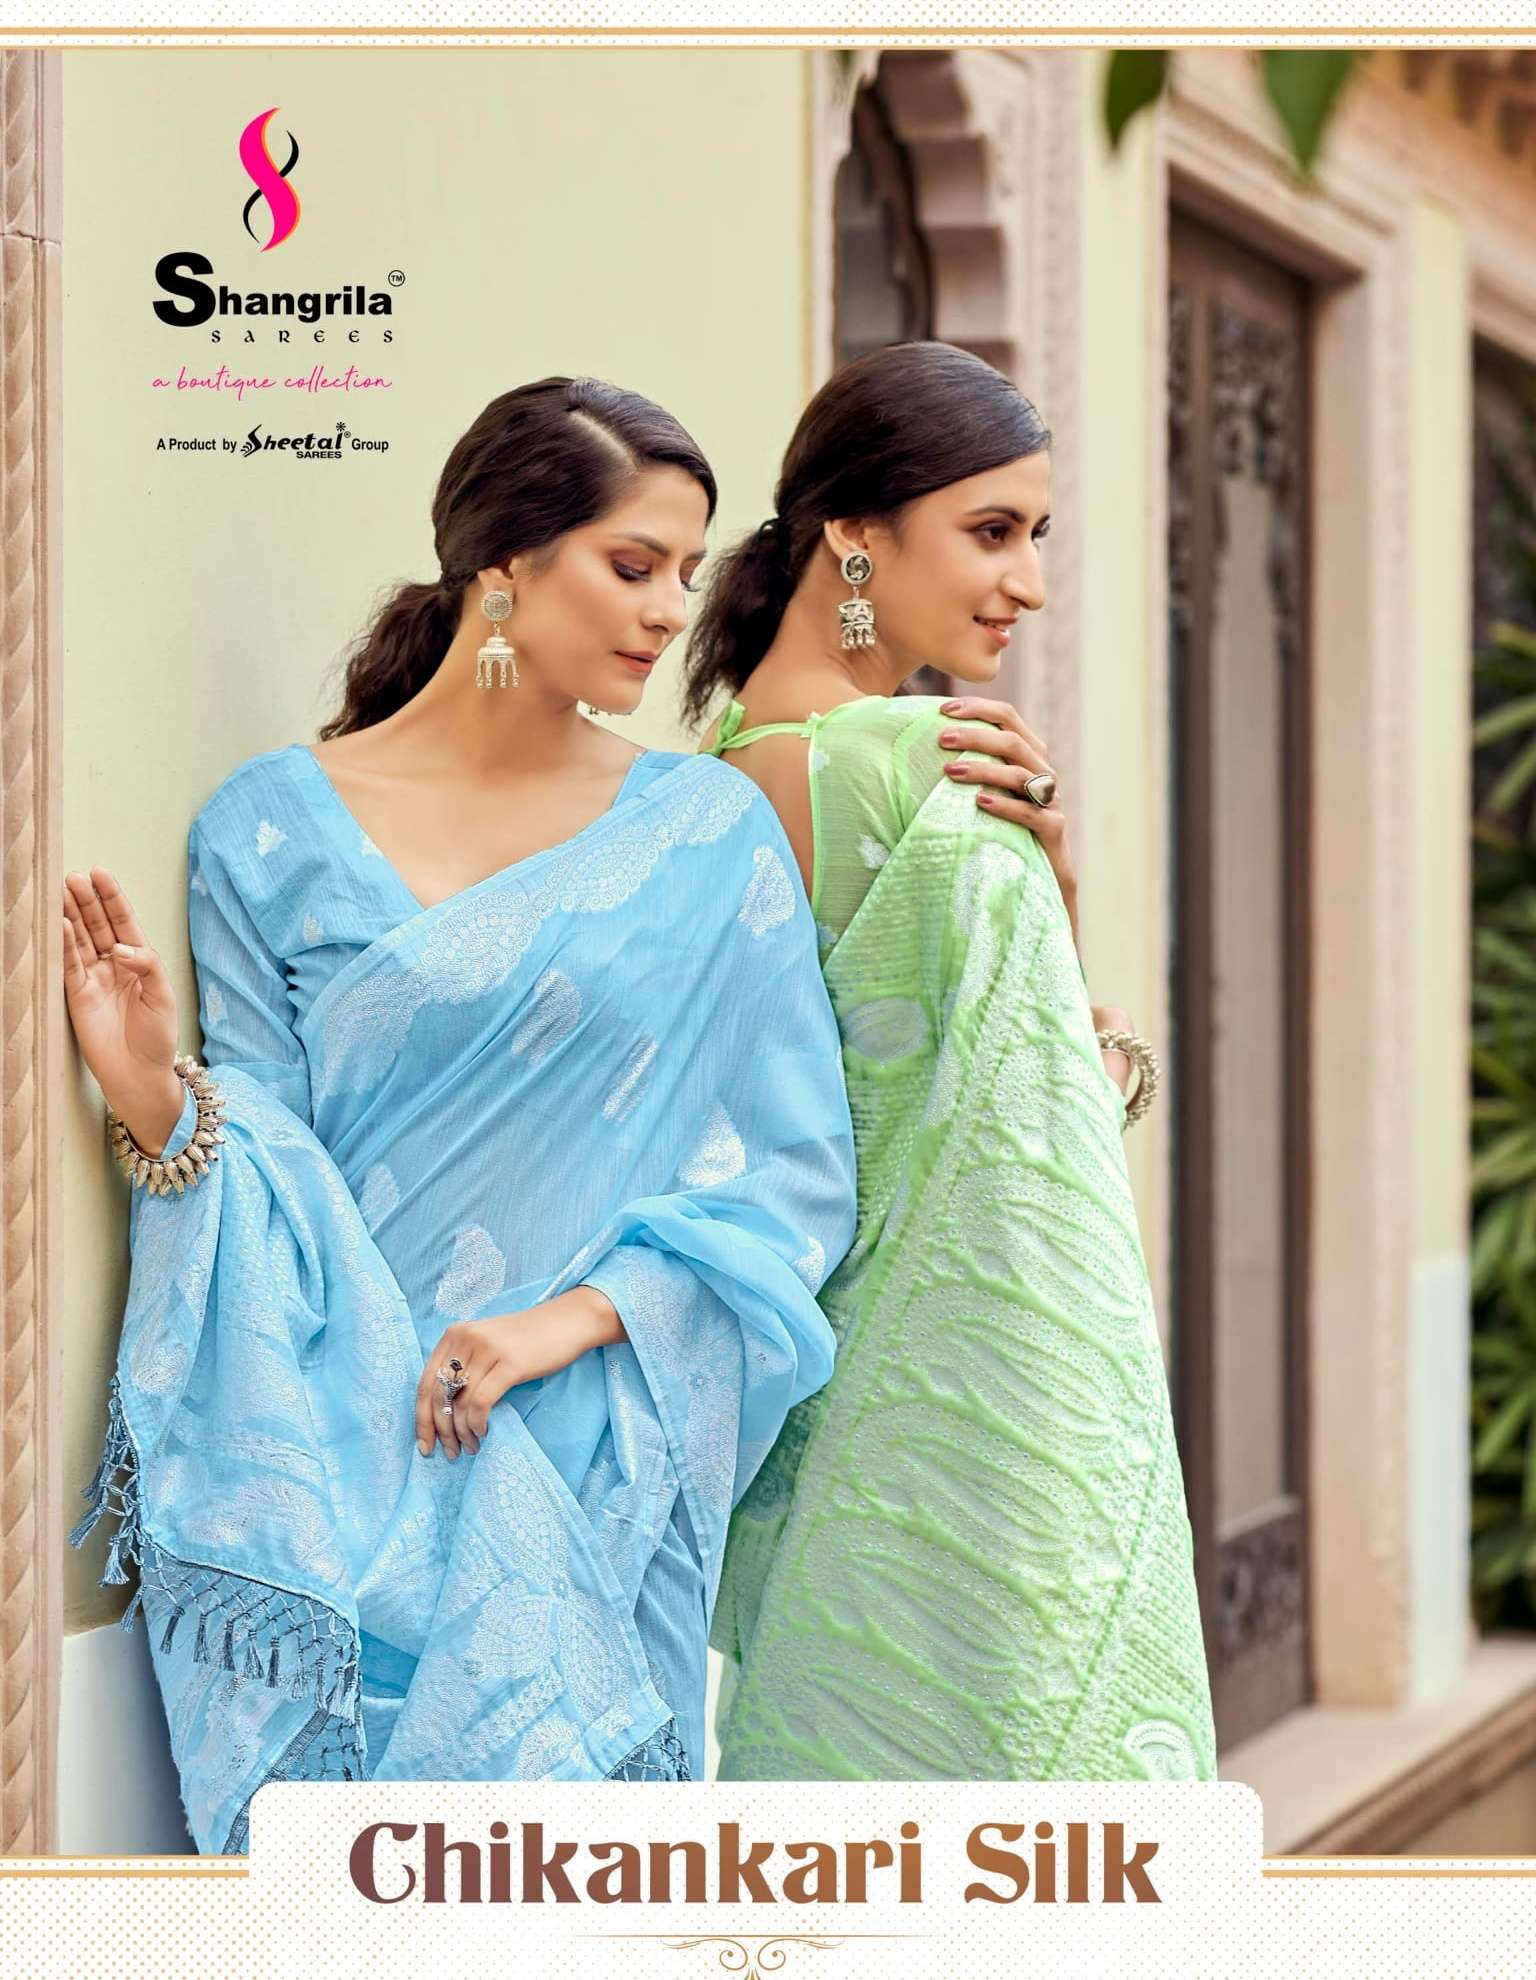 shangrila chikankari silk lucknowi thread work linen sarees 